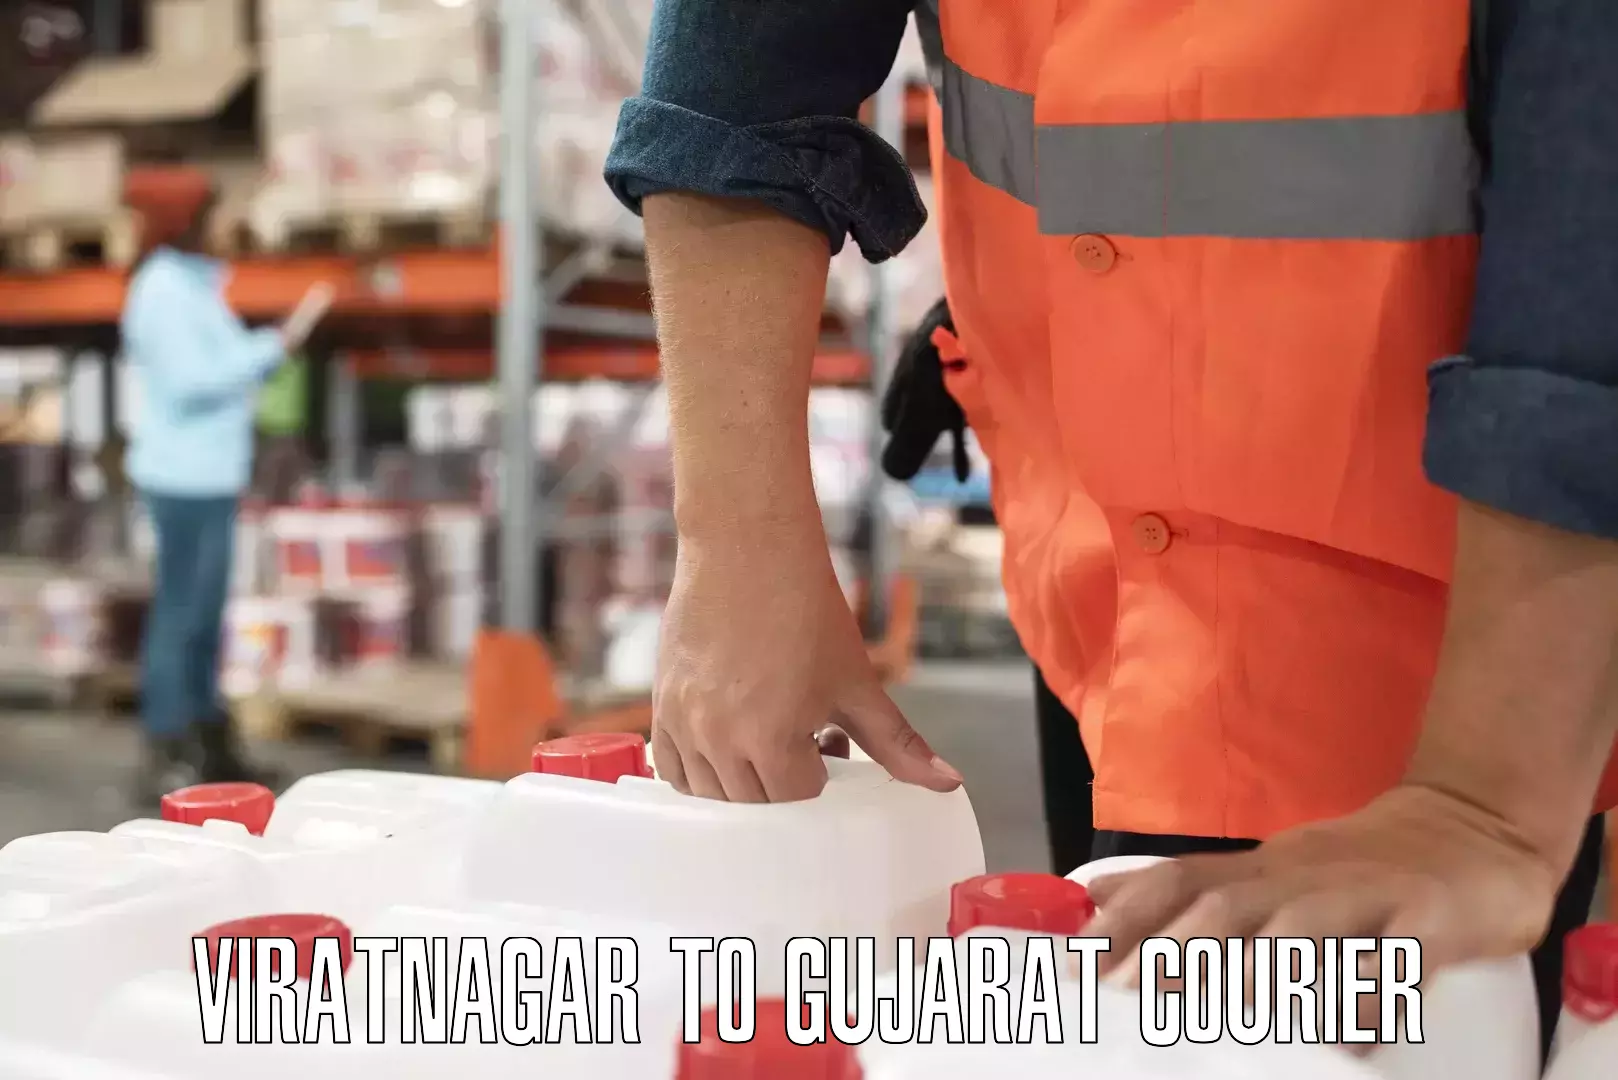 State-of-the-art courier technology Viratnagar to Limbdi